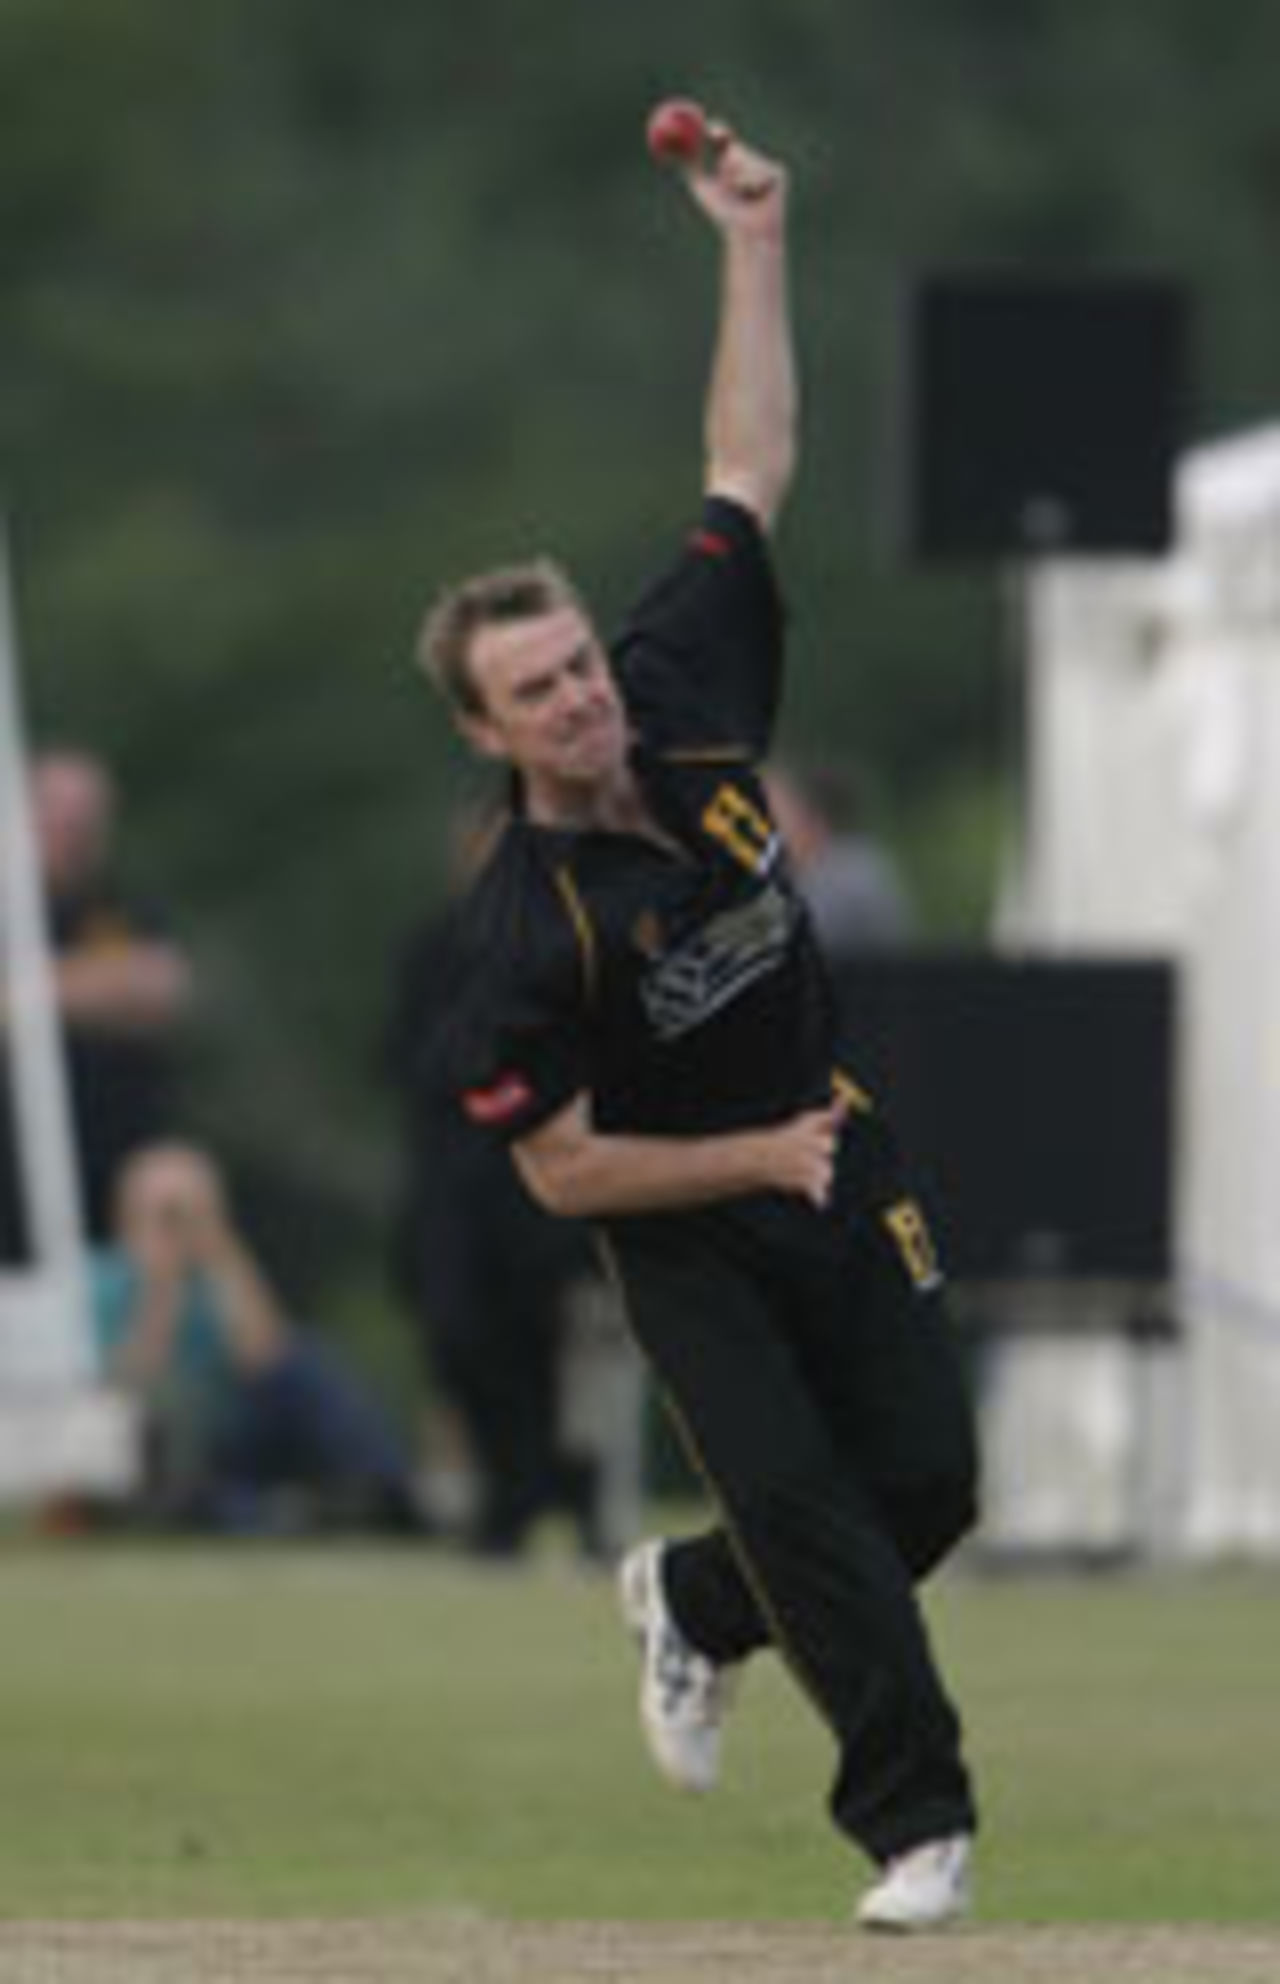 Phil Tufnell bowling, Lashings v Cambridge University, Mote Park,  Maidstone, June 24, 2003